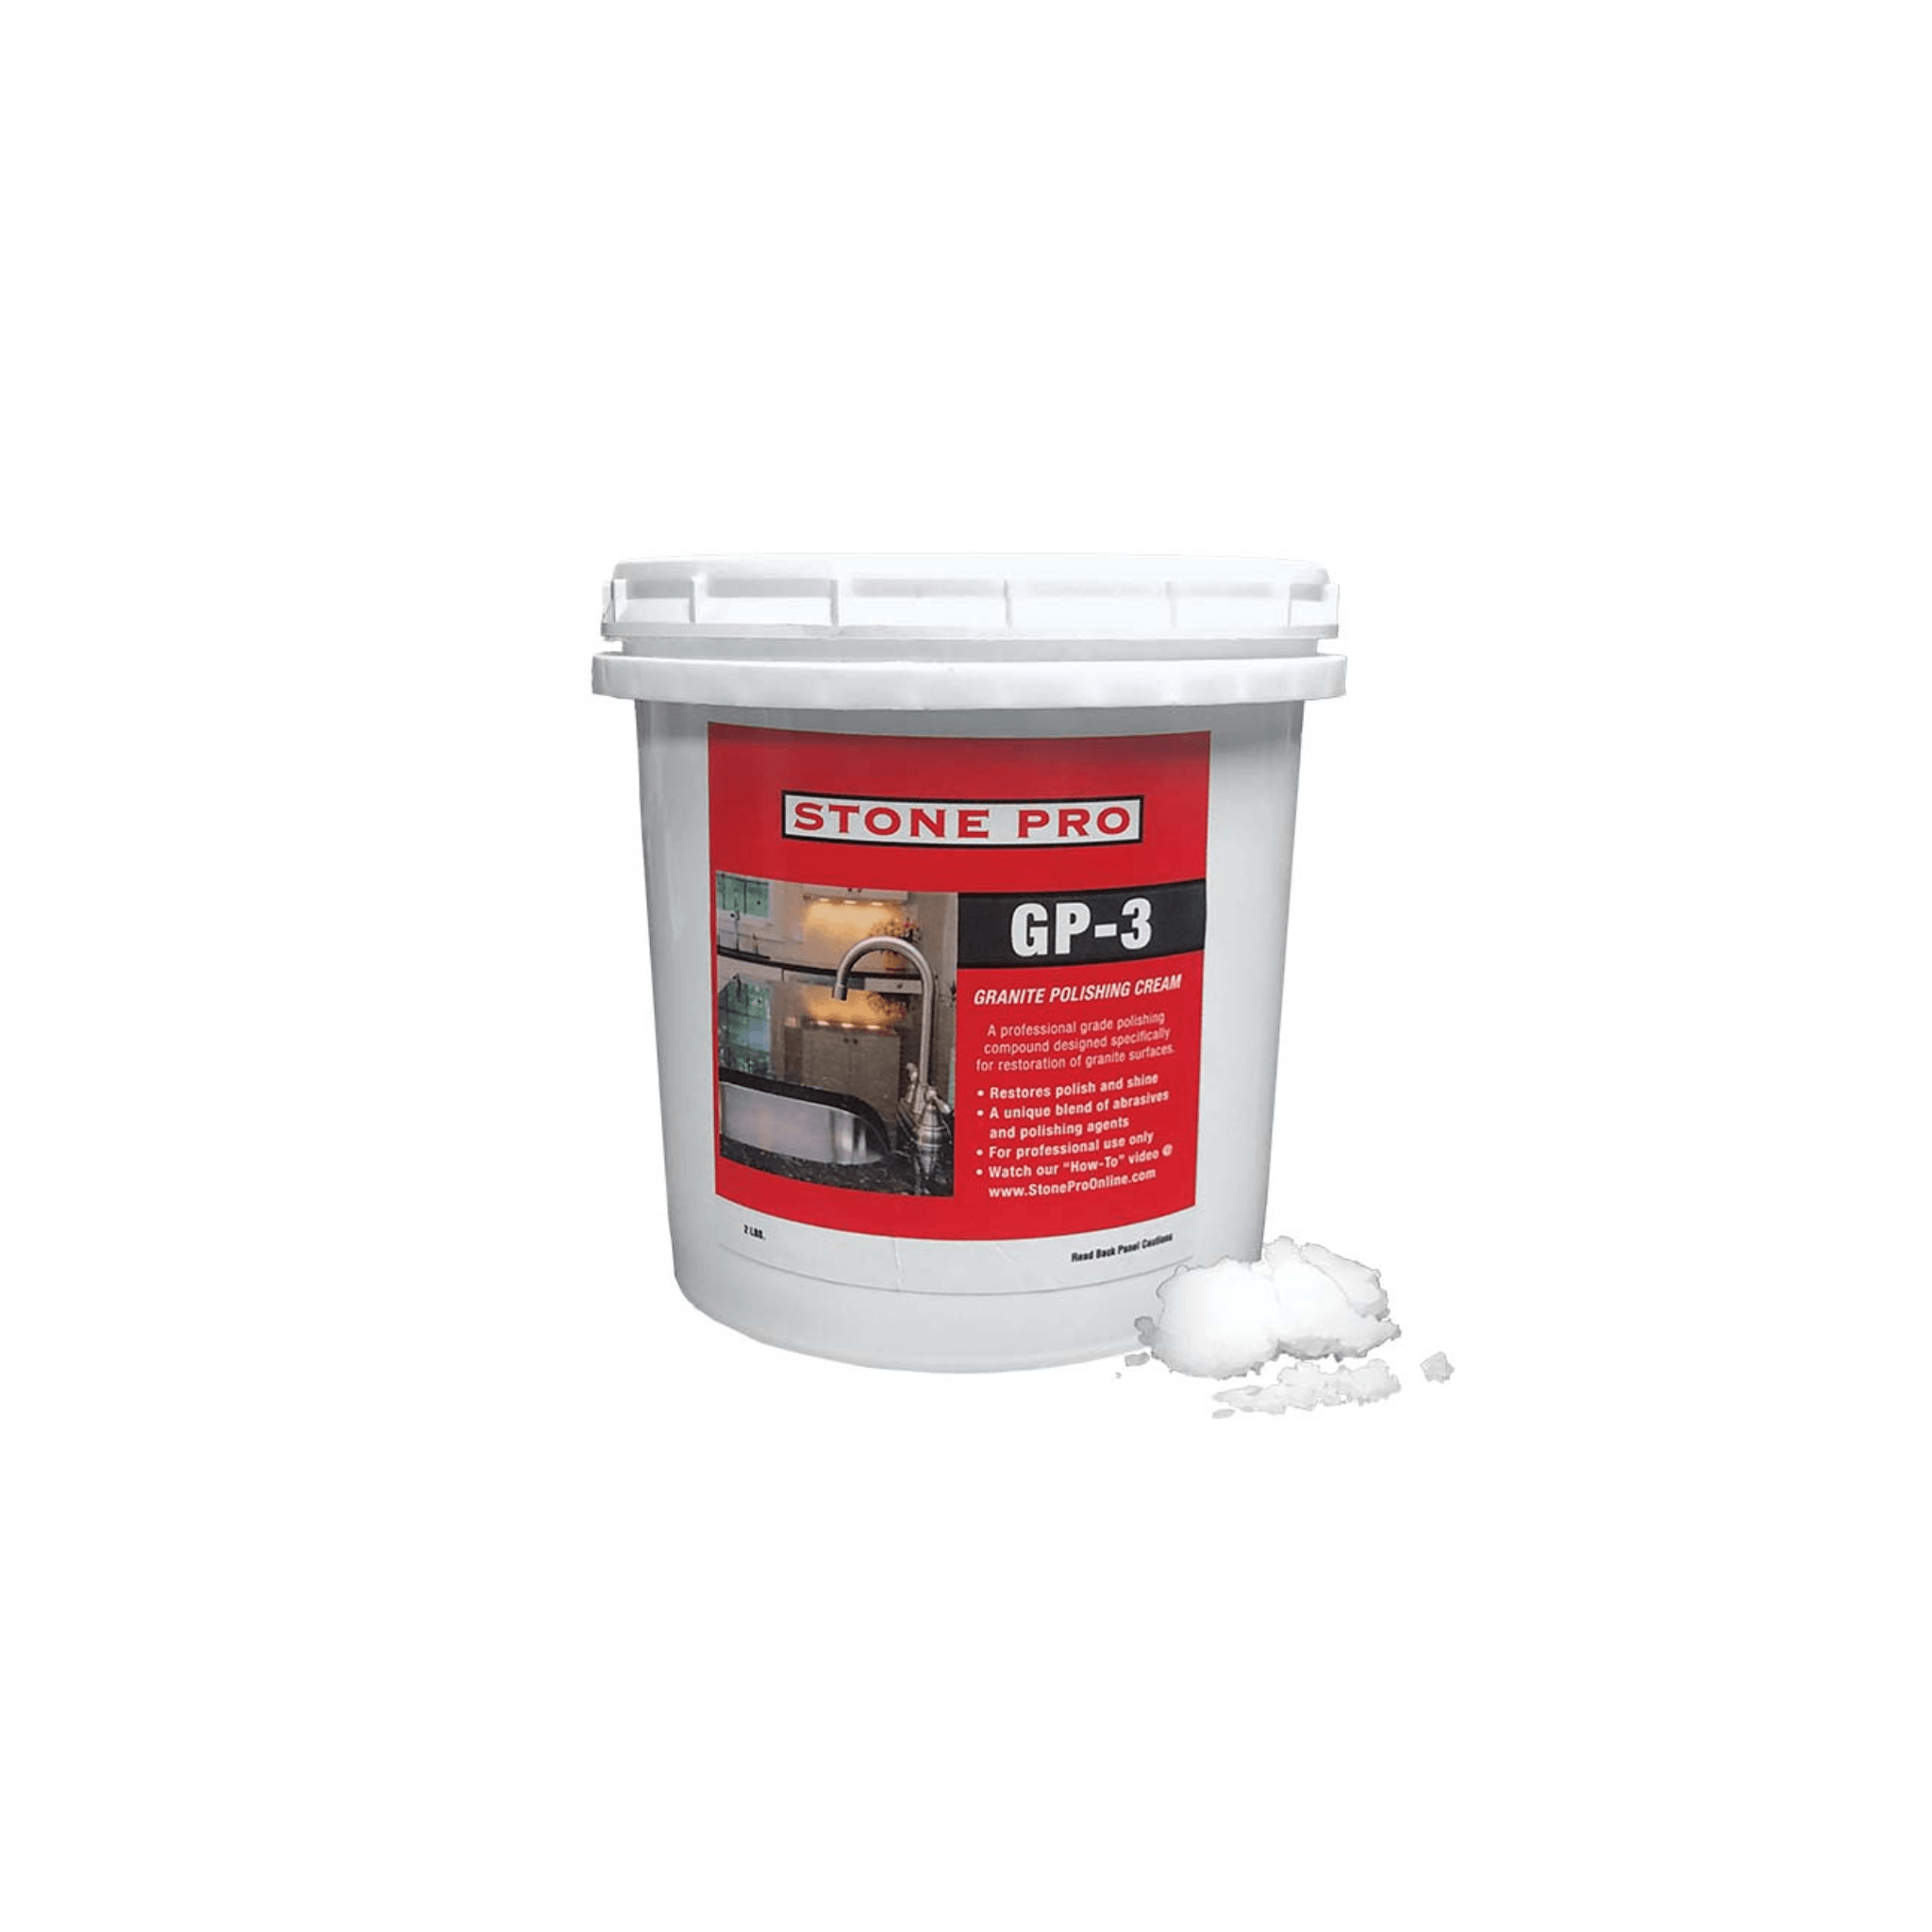 Stone Pro Gp3 Granite Polishing Cream, 2 lbs - Direct Stone Tool Supply, Inc